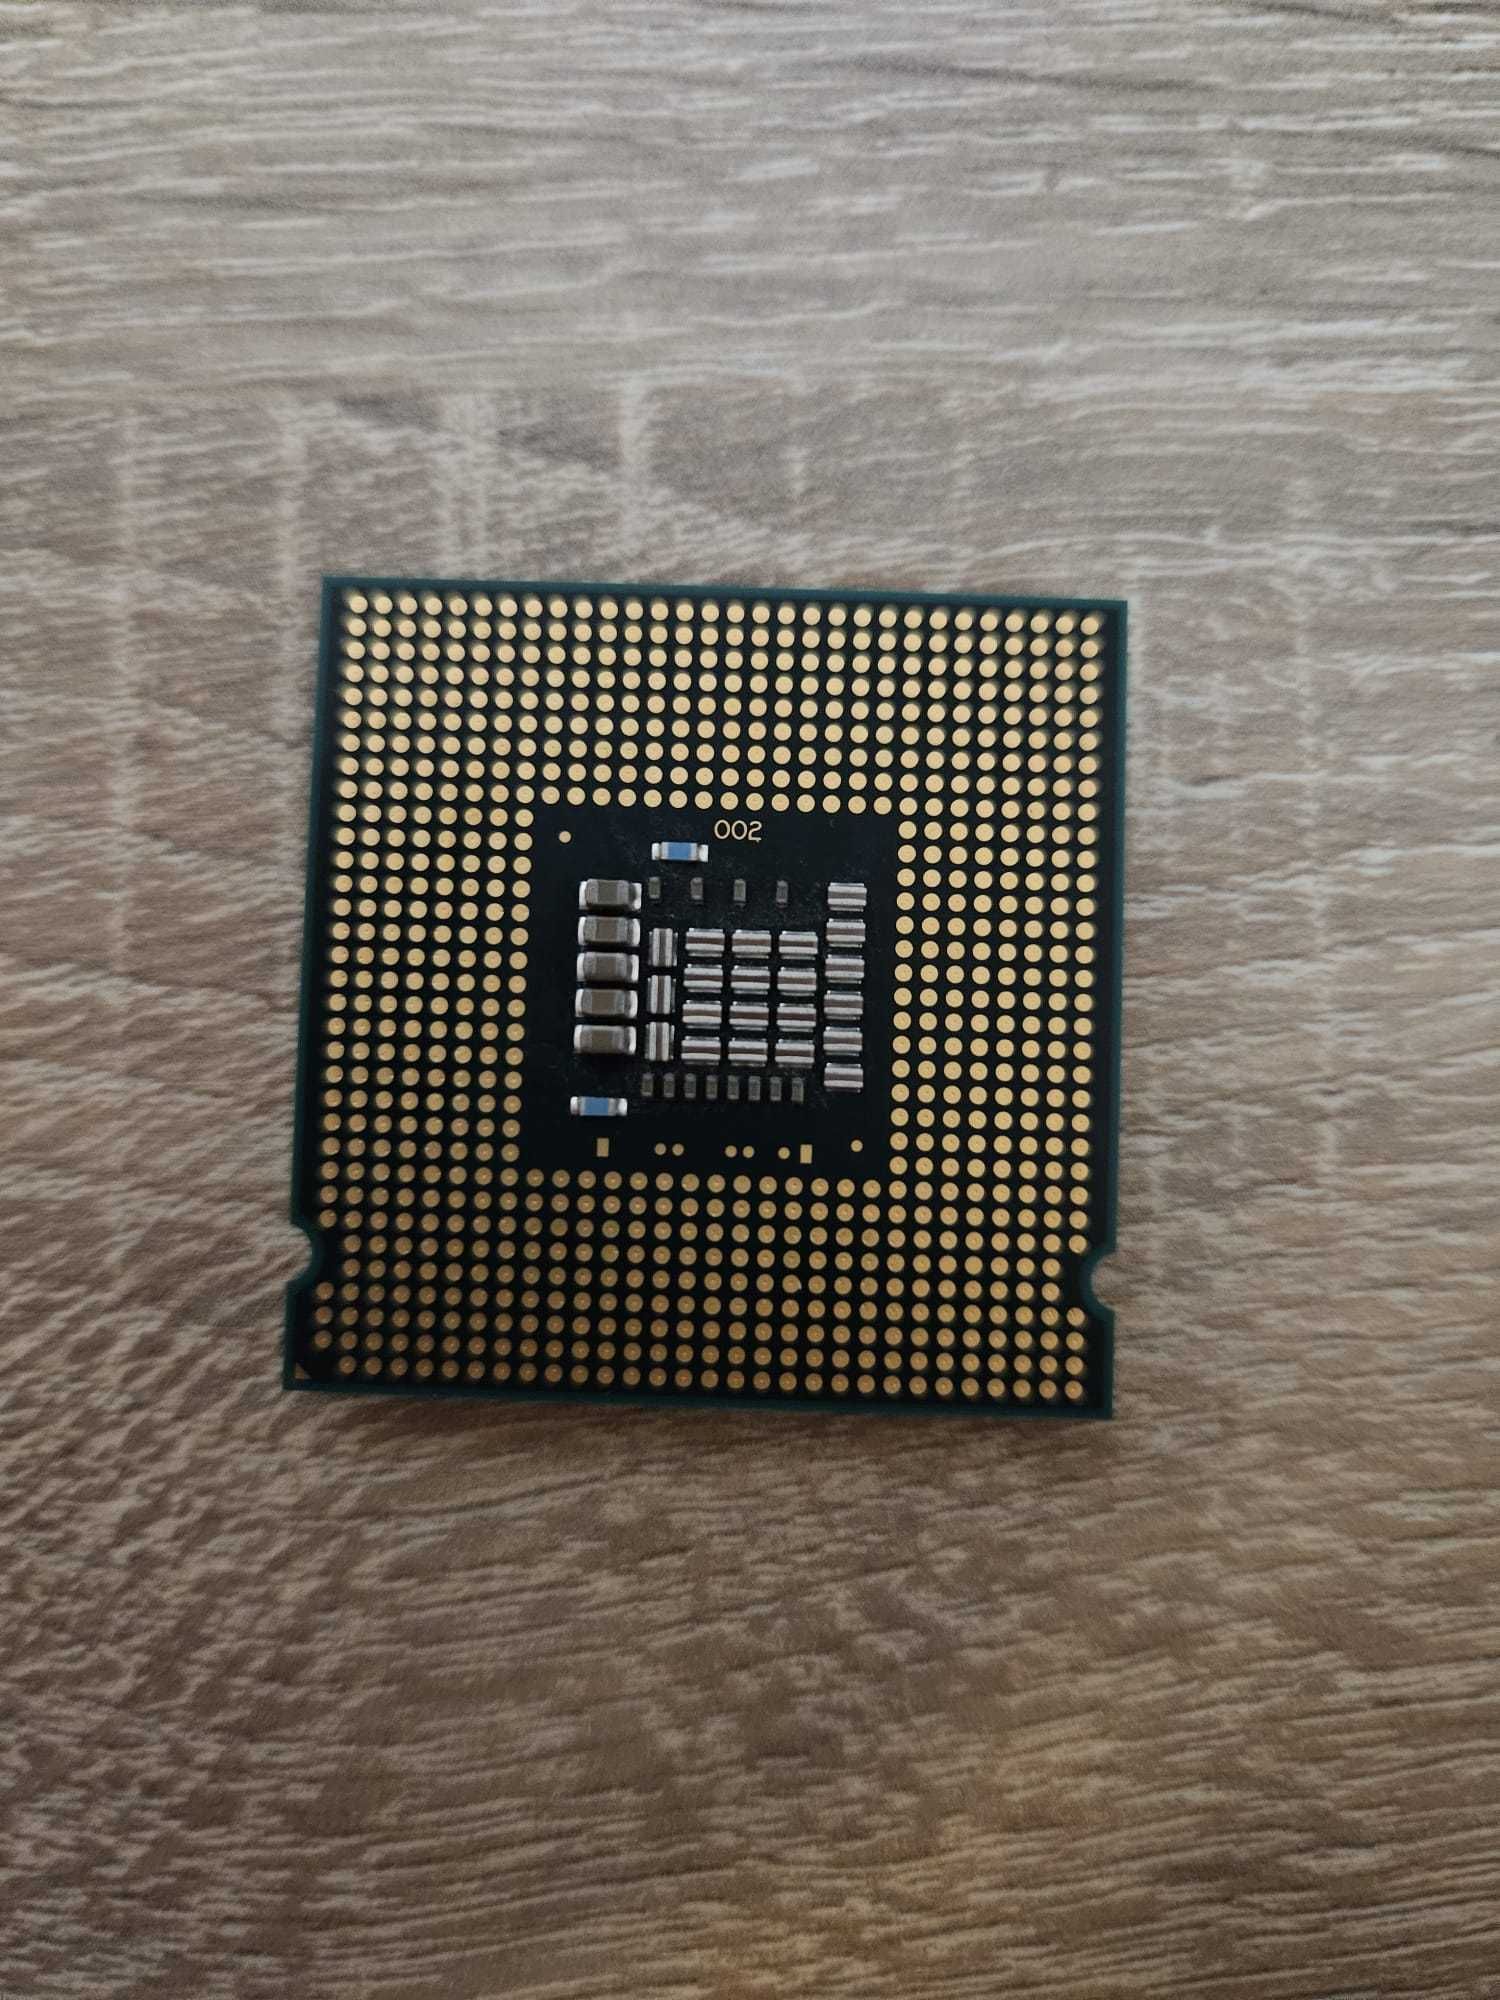 MicroProcesor Intel Core 2 DUO si Intel Pentium Dual-Core